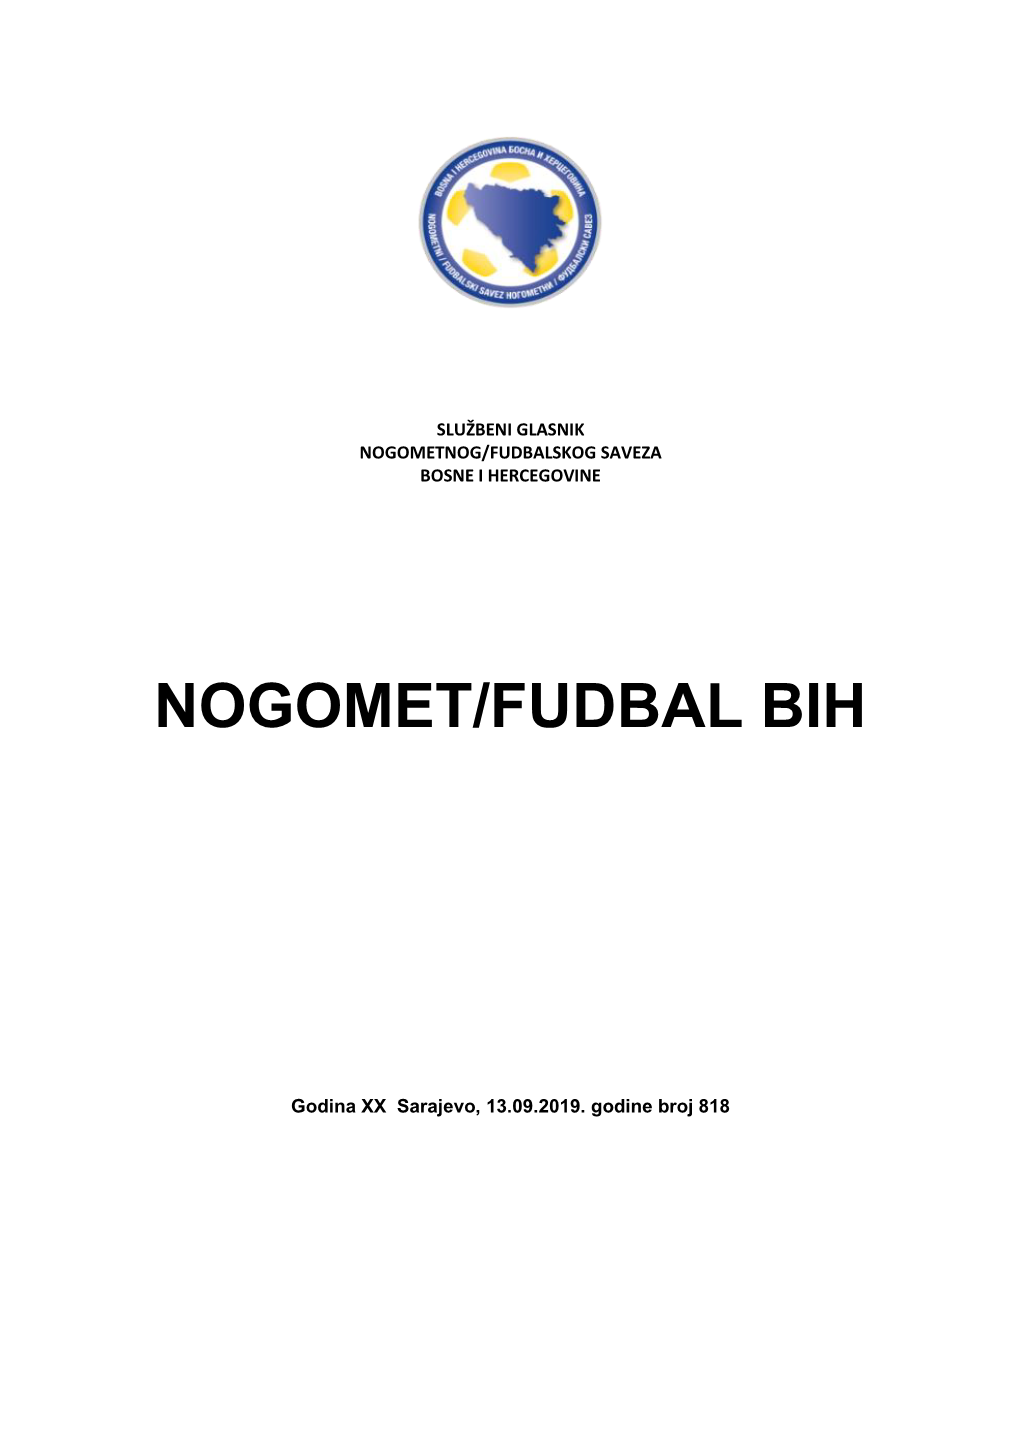 Nogomet/Fudbal Bih